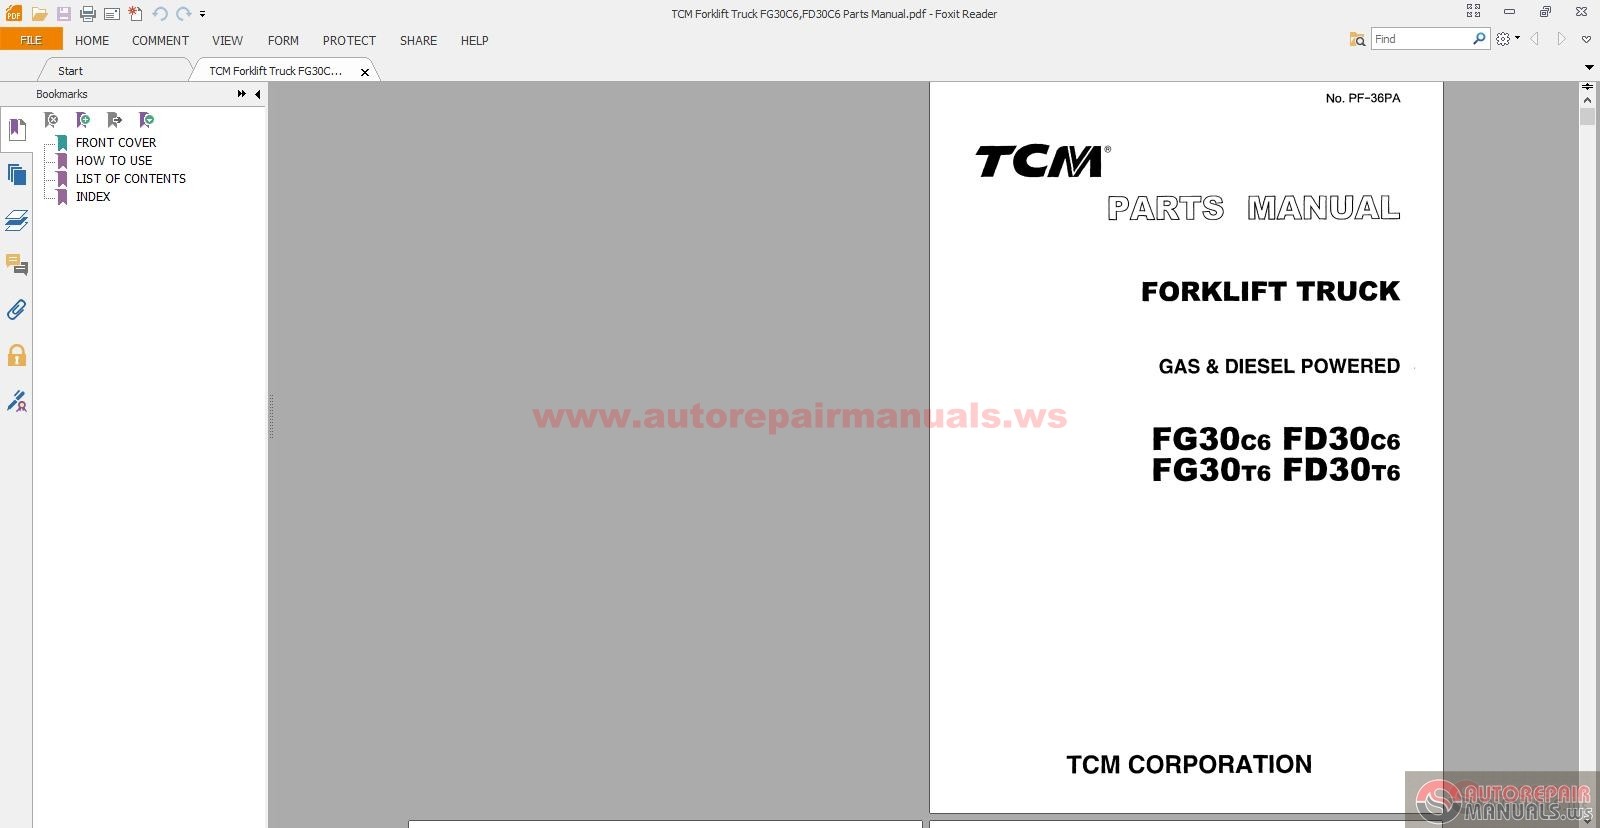 Tcm Forklift Truck Fg30c6 Fd30c6 Parts Manual Auto Repair Manual Forum Heavy Equipment Forums Download Repair Workshop Manual